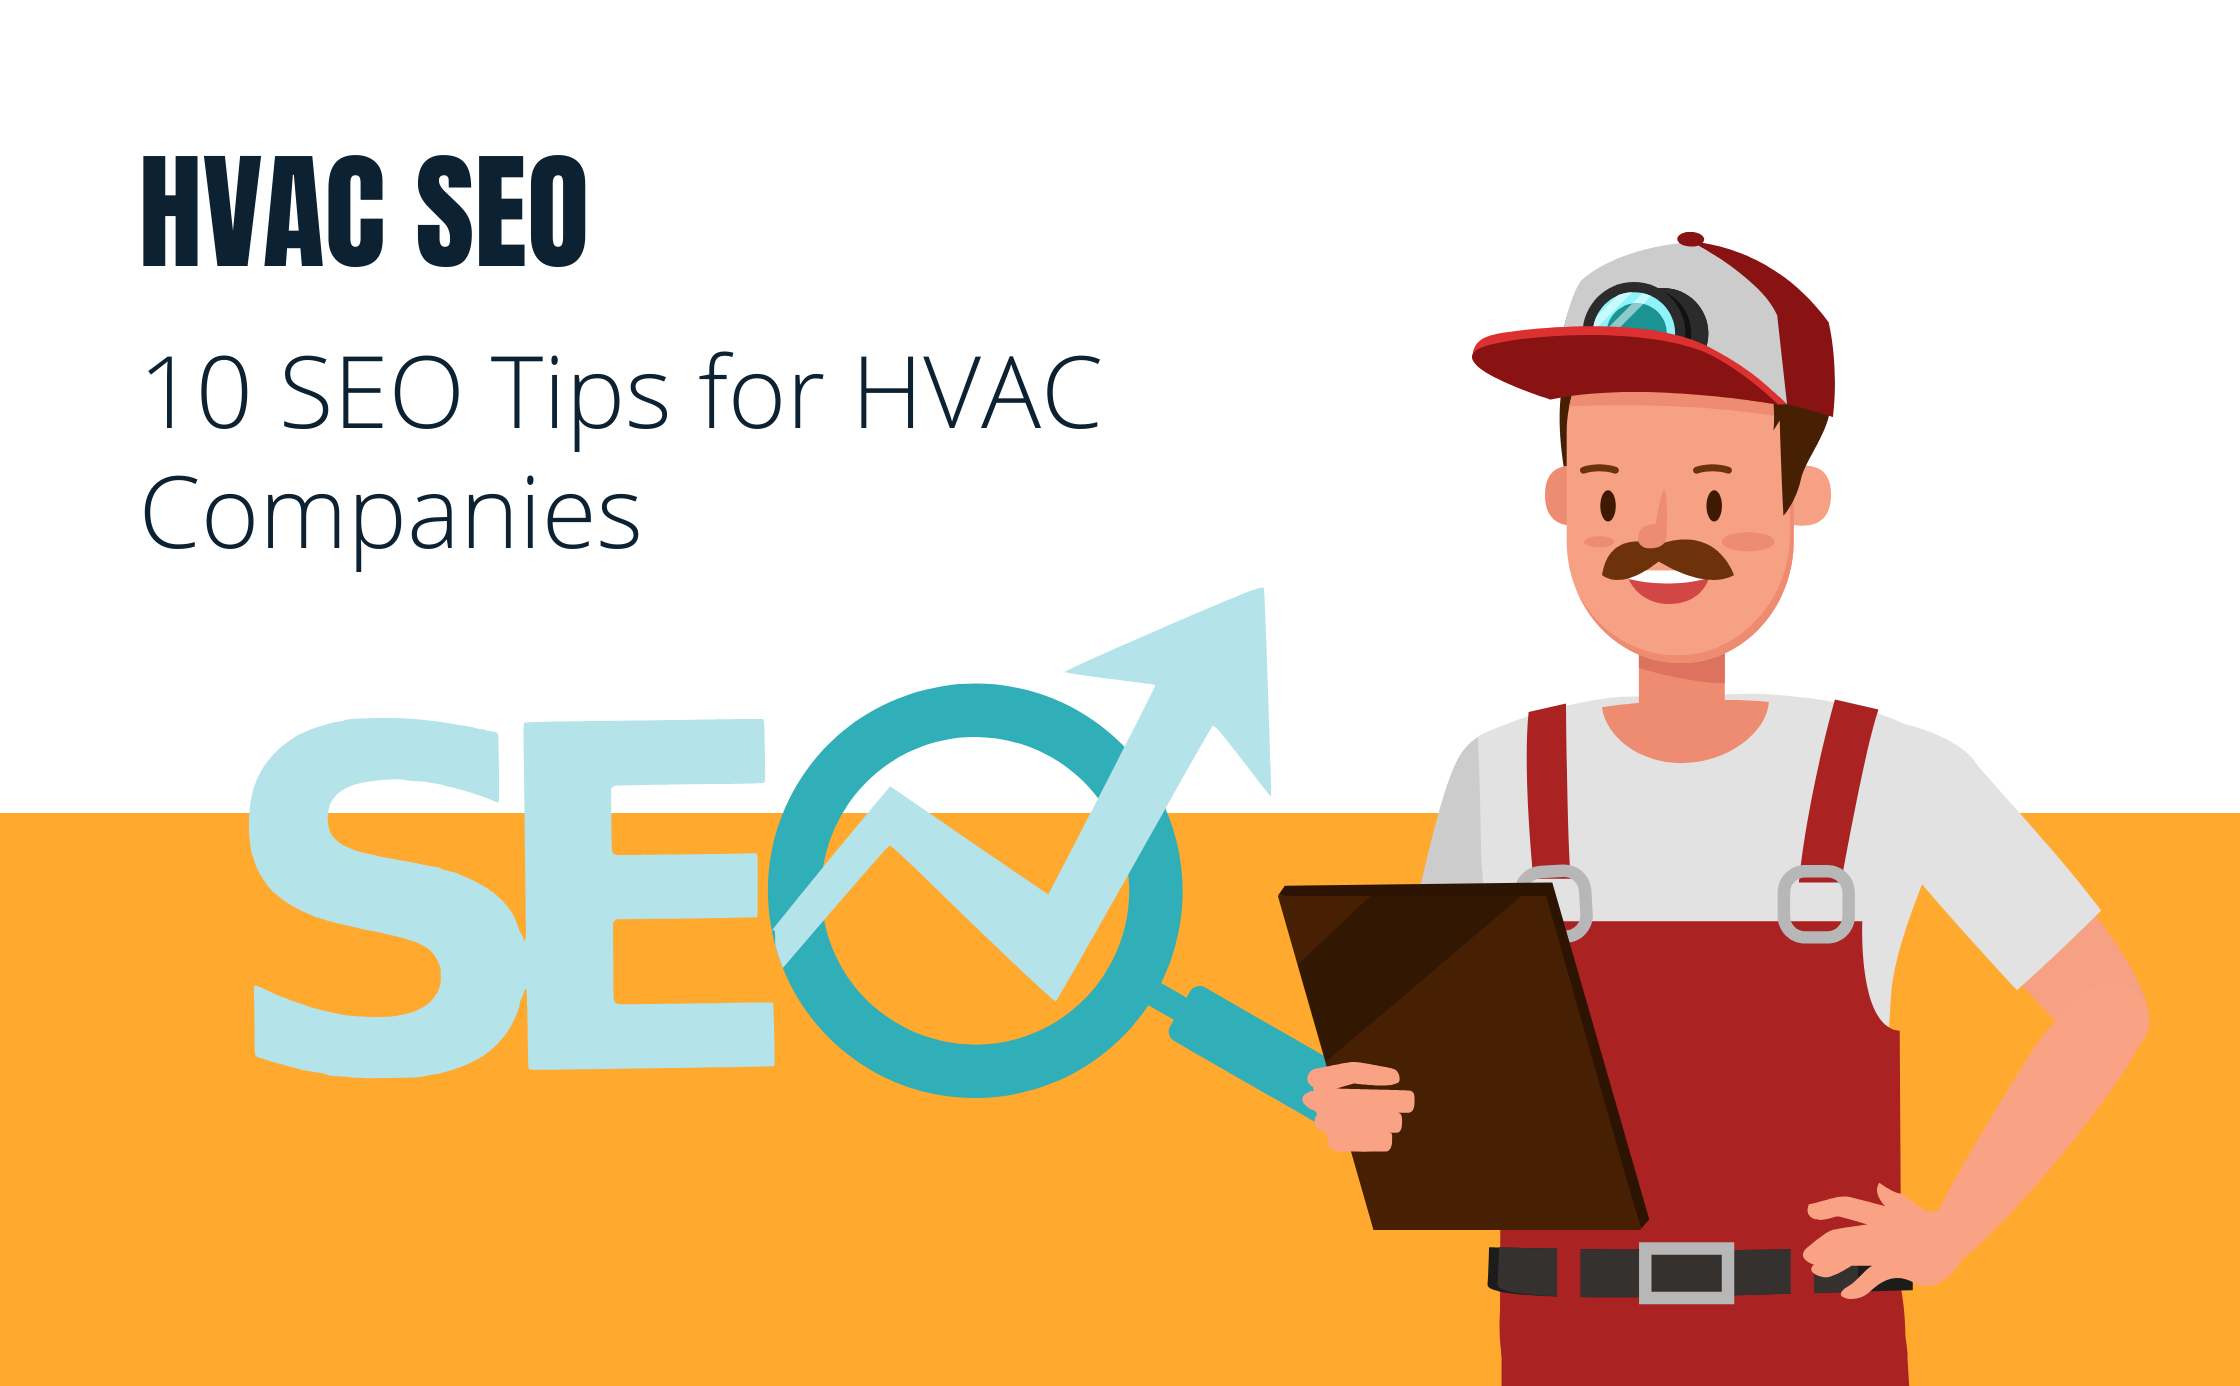 HVAC SEO: 10 SEO Tips for HVAC Companies